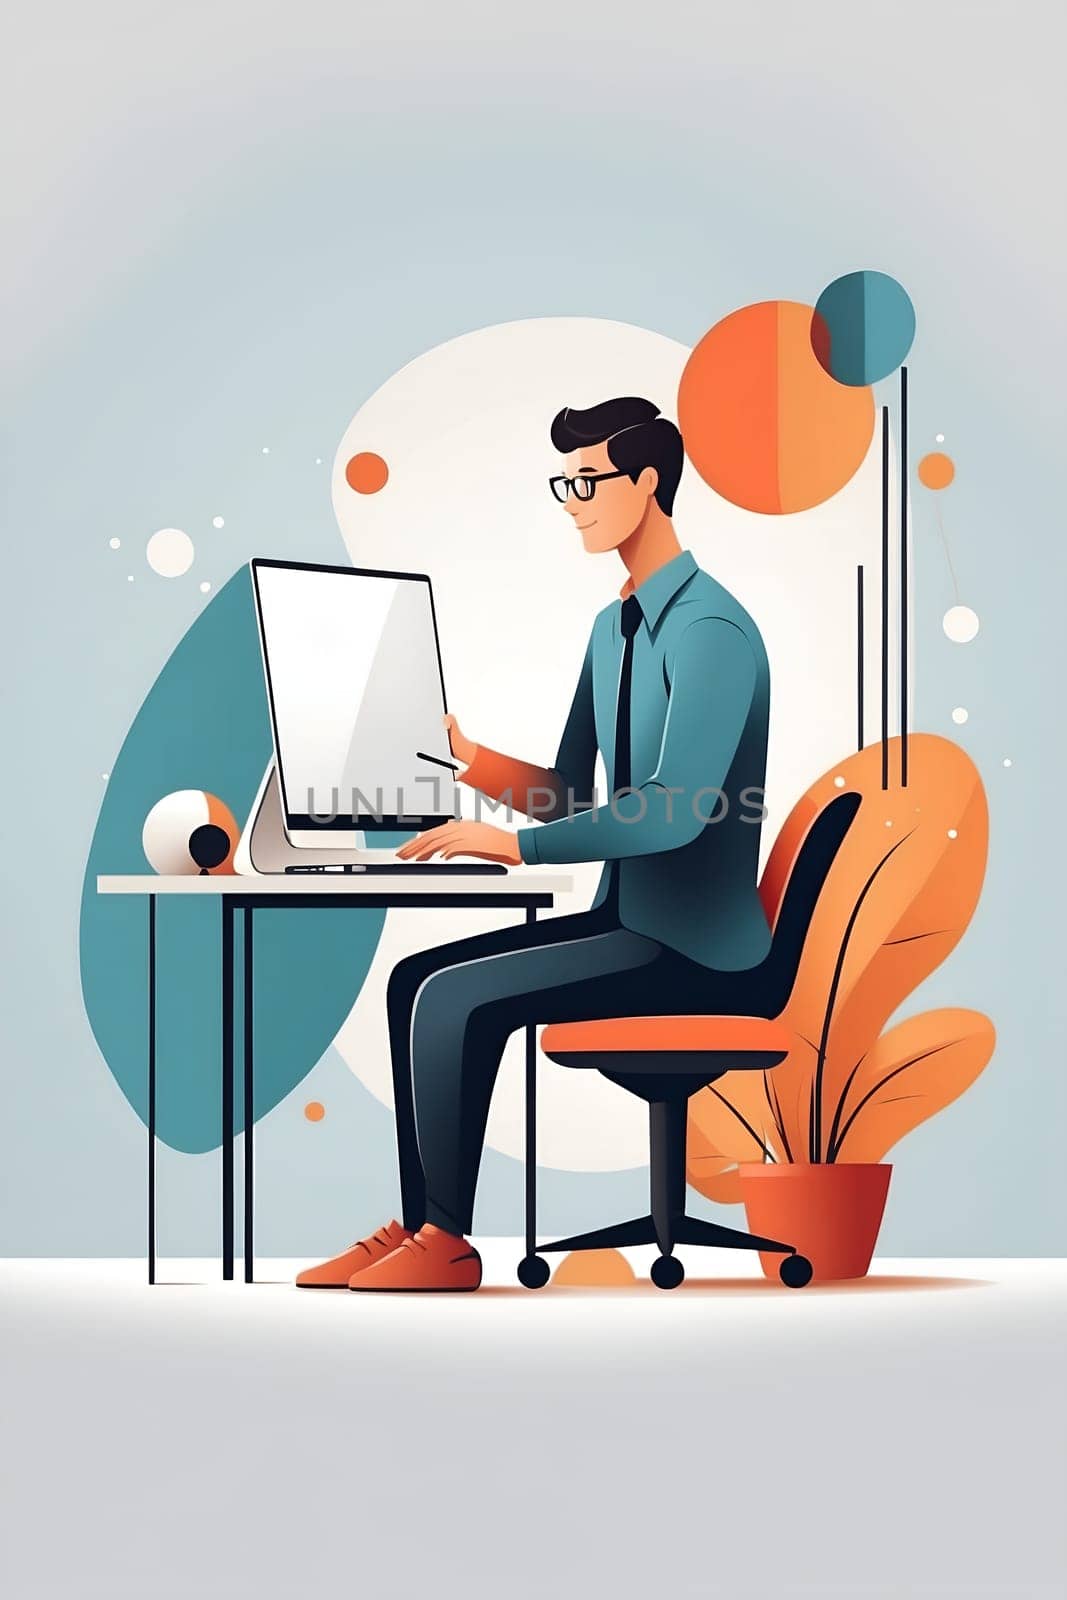 Man Sitting at Desk Using Laptop Computer, Productive Work Environment. Generative AI. by artofphoto